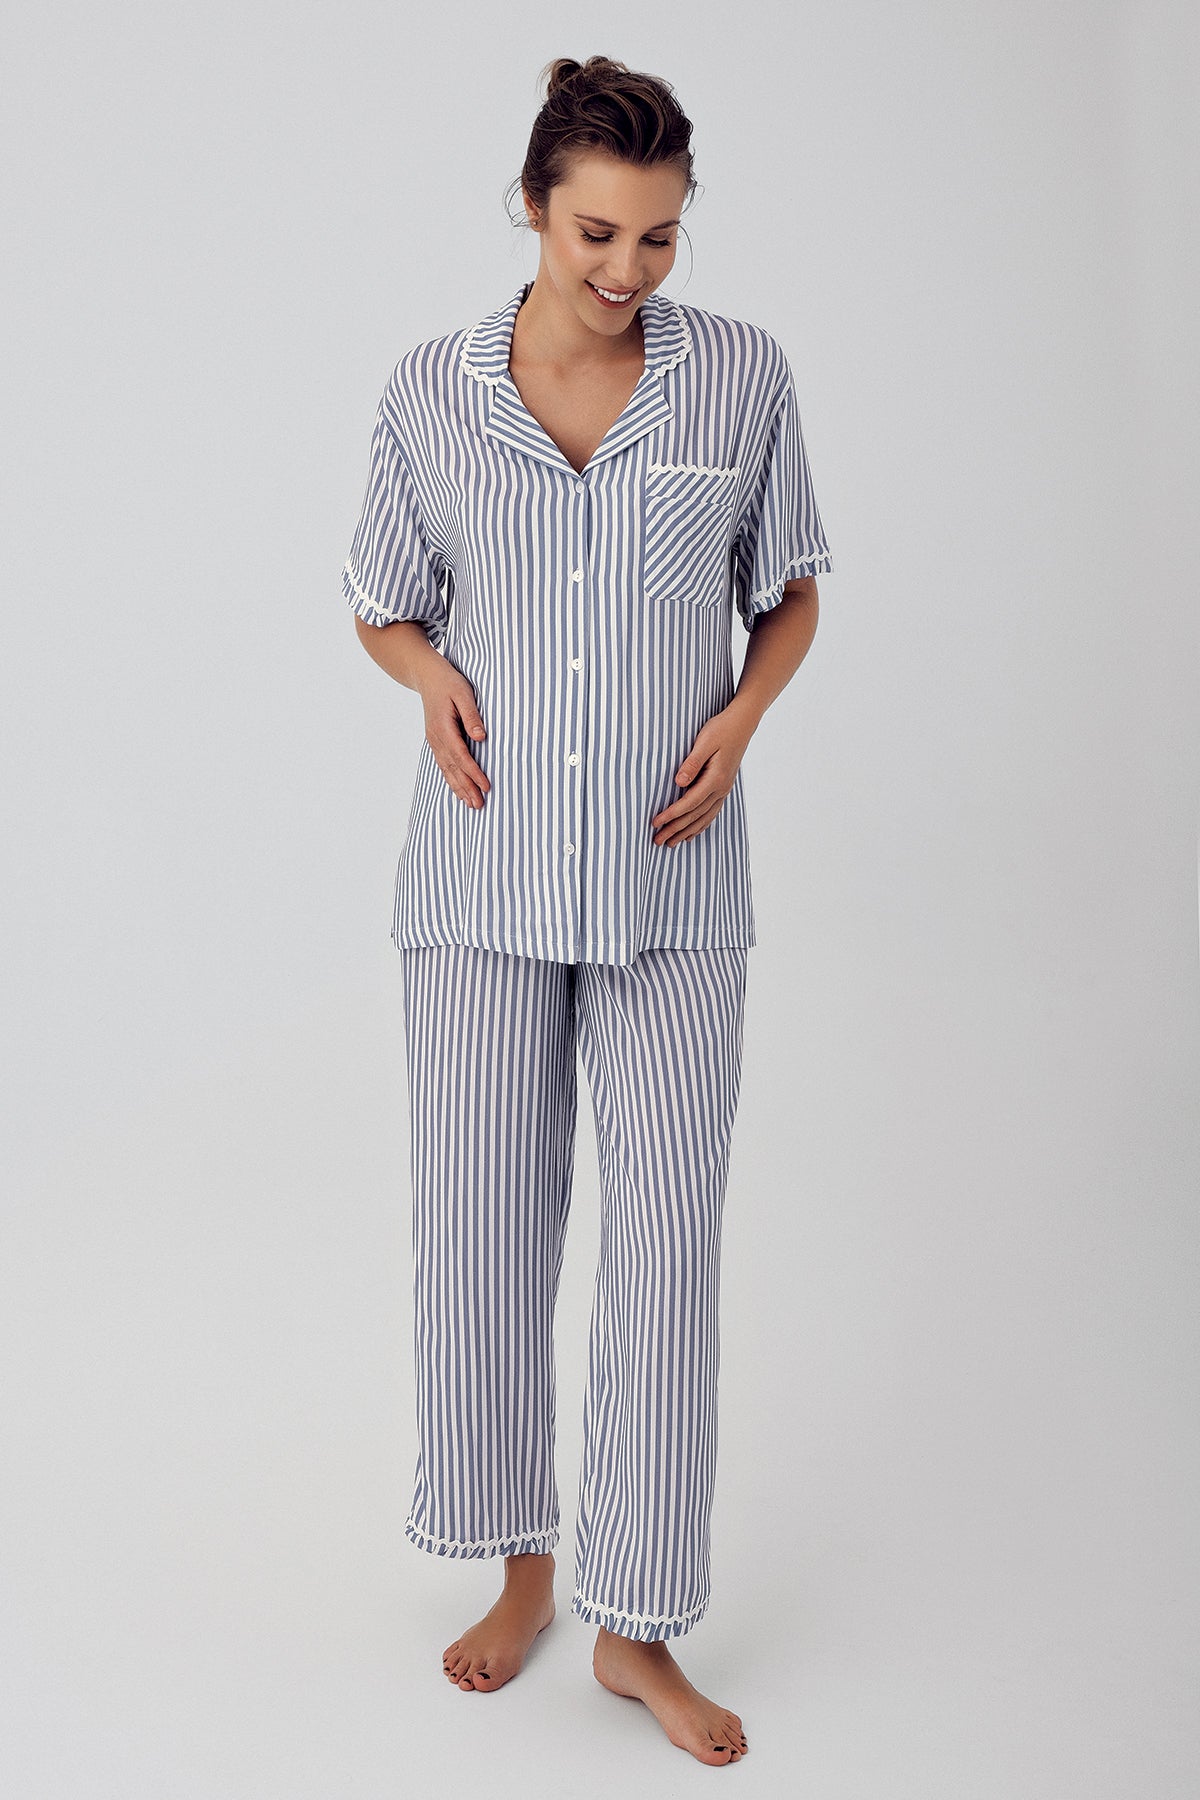 Shopymommy 16203 Striped Maternity & Nursing Pajamas Indigo